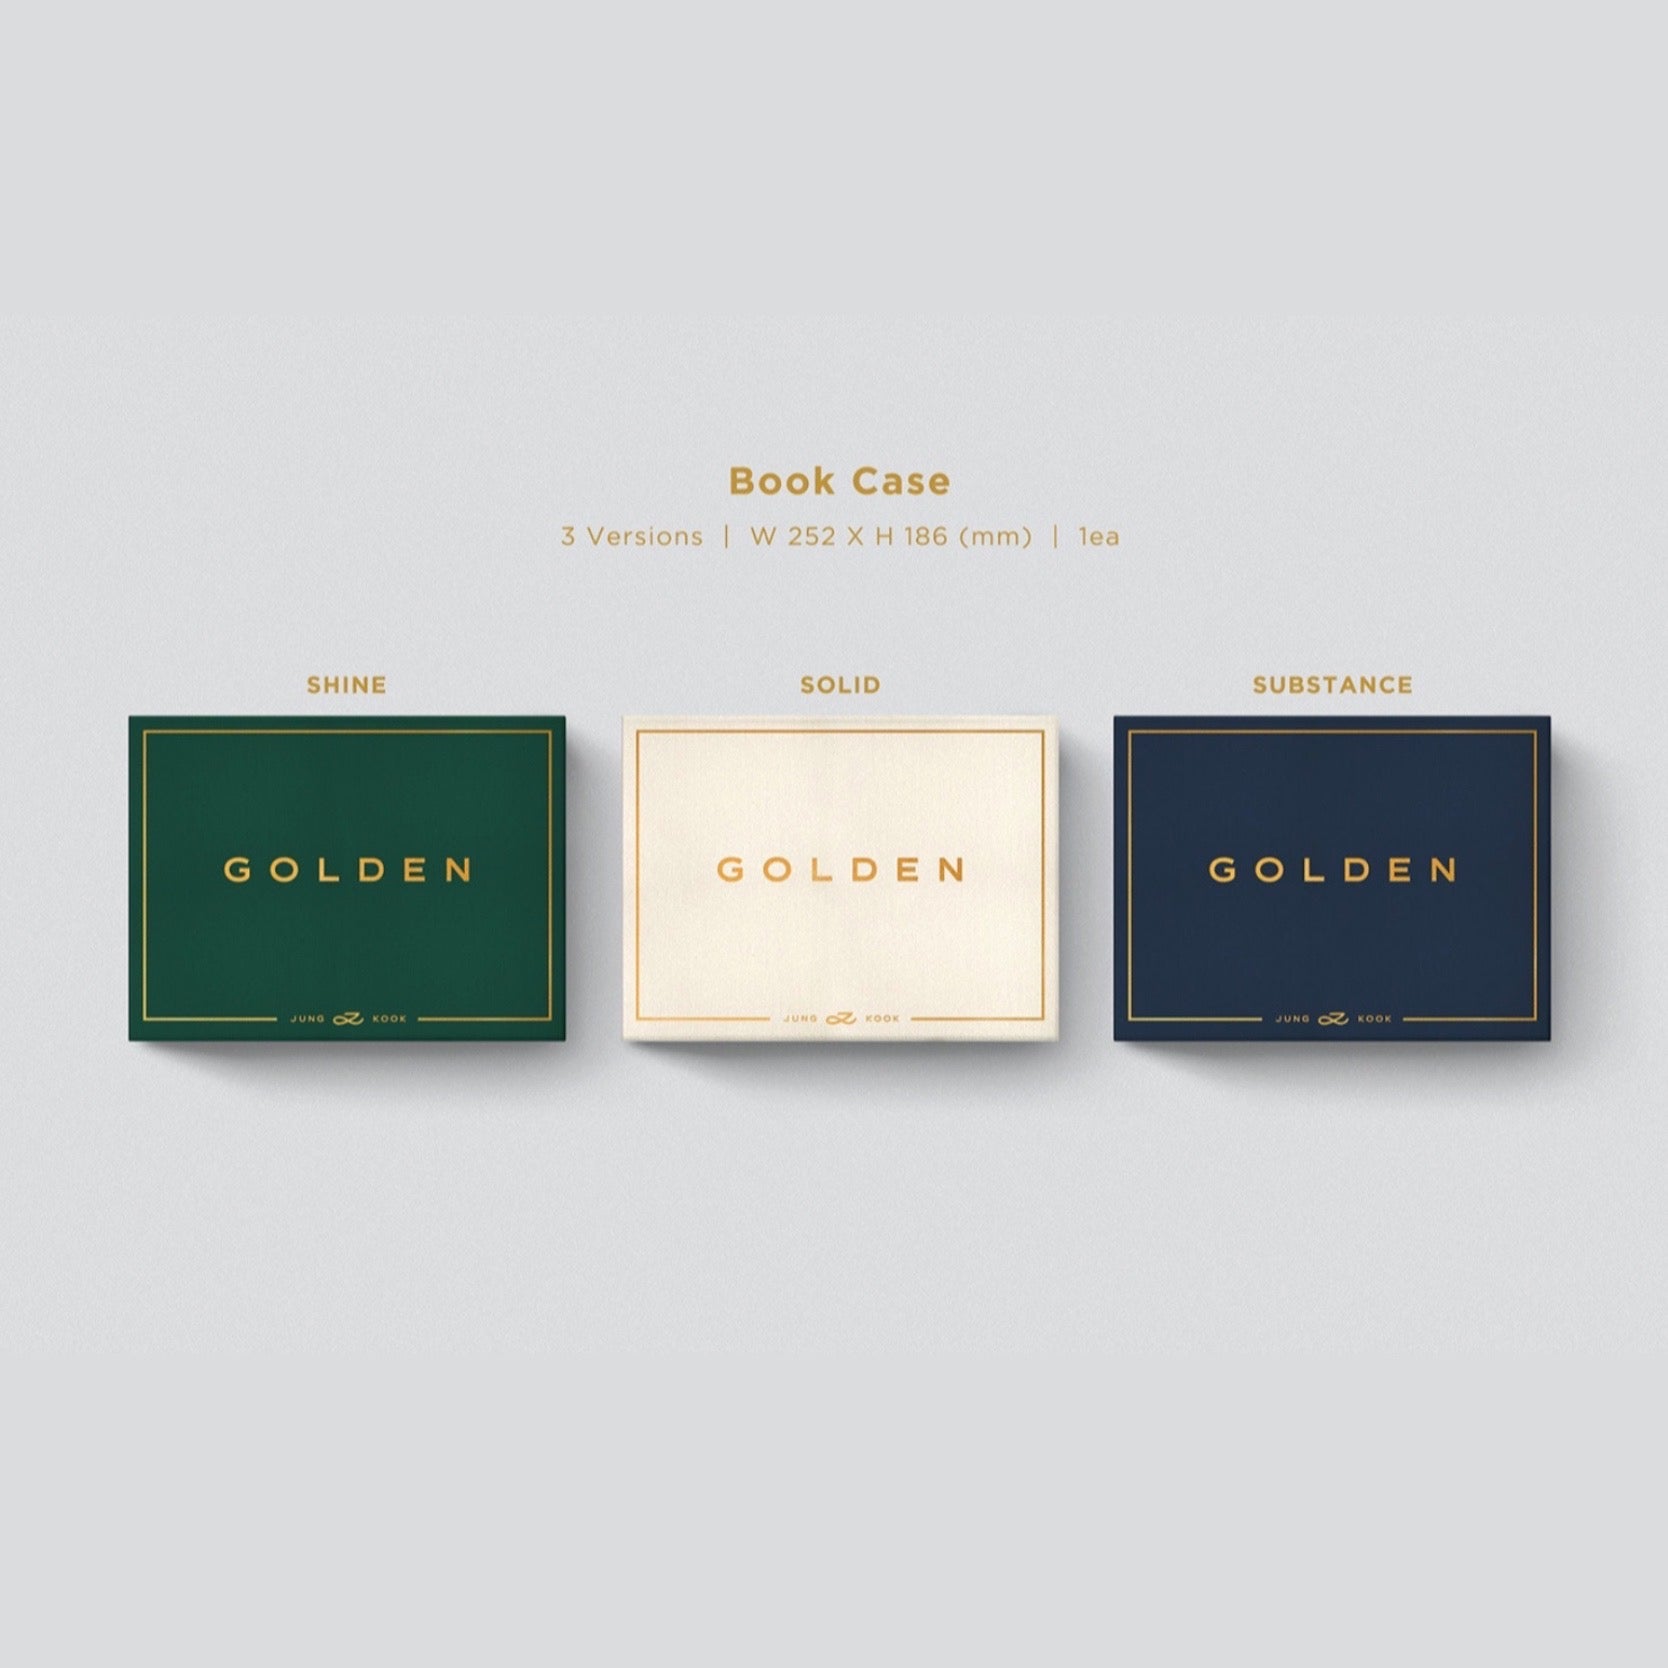 BTS JUNGKOOK - GOLDEN 1st Solo Album Weverse Album Ver – K-STAR